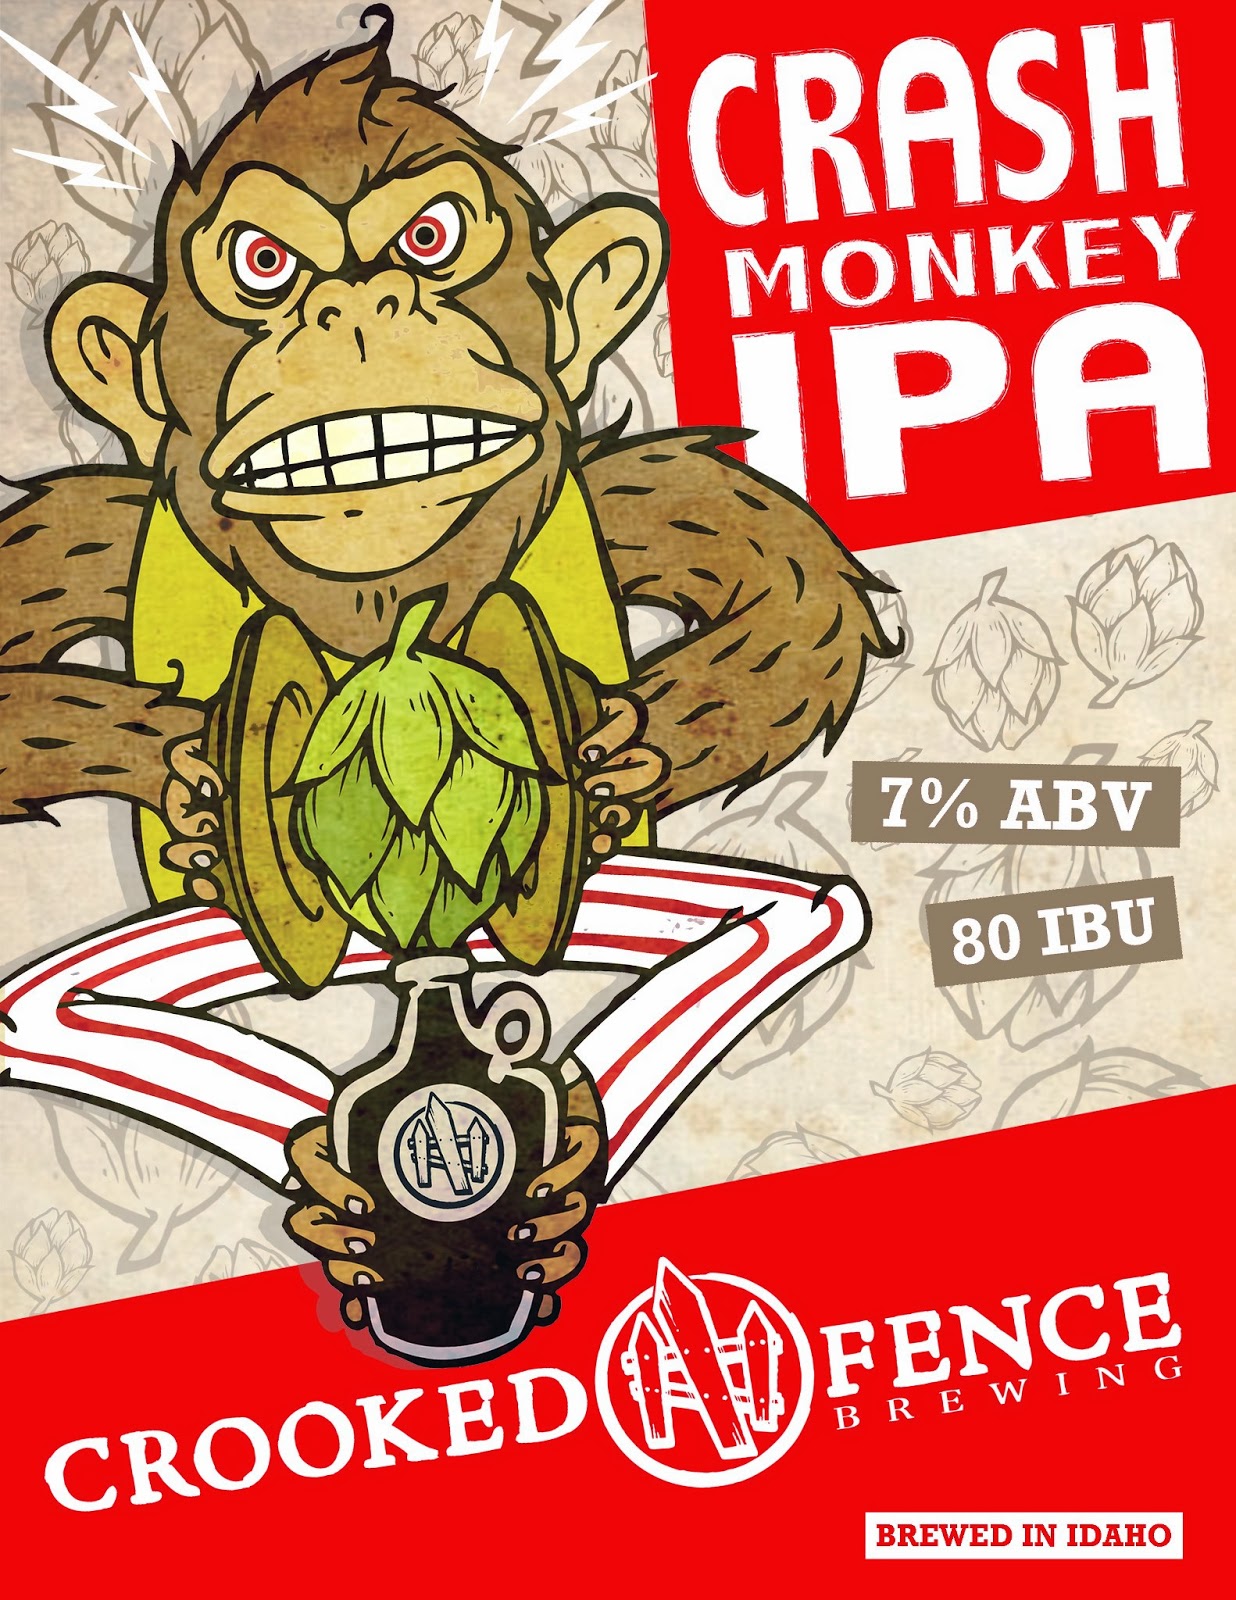 Crooked Fence Brew Gallery: Crash Monkey IPA